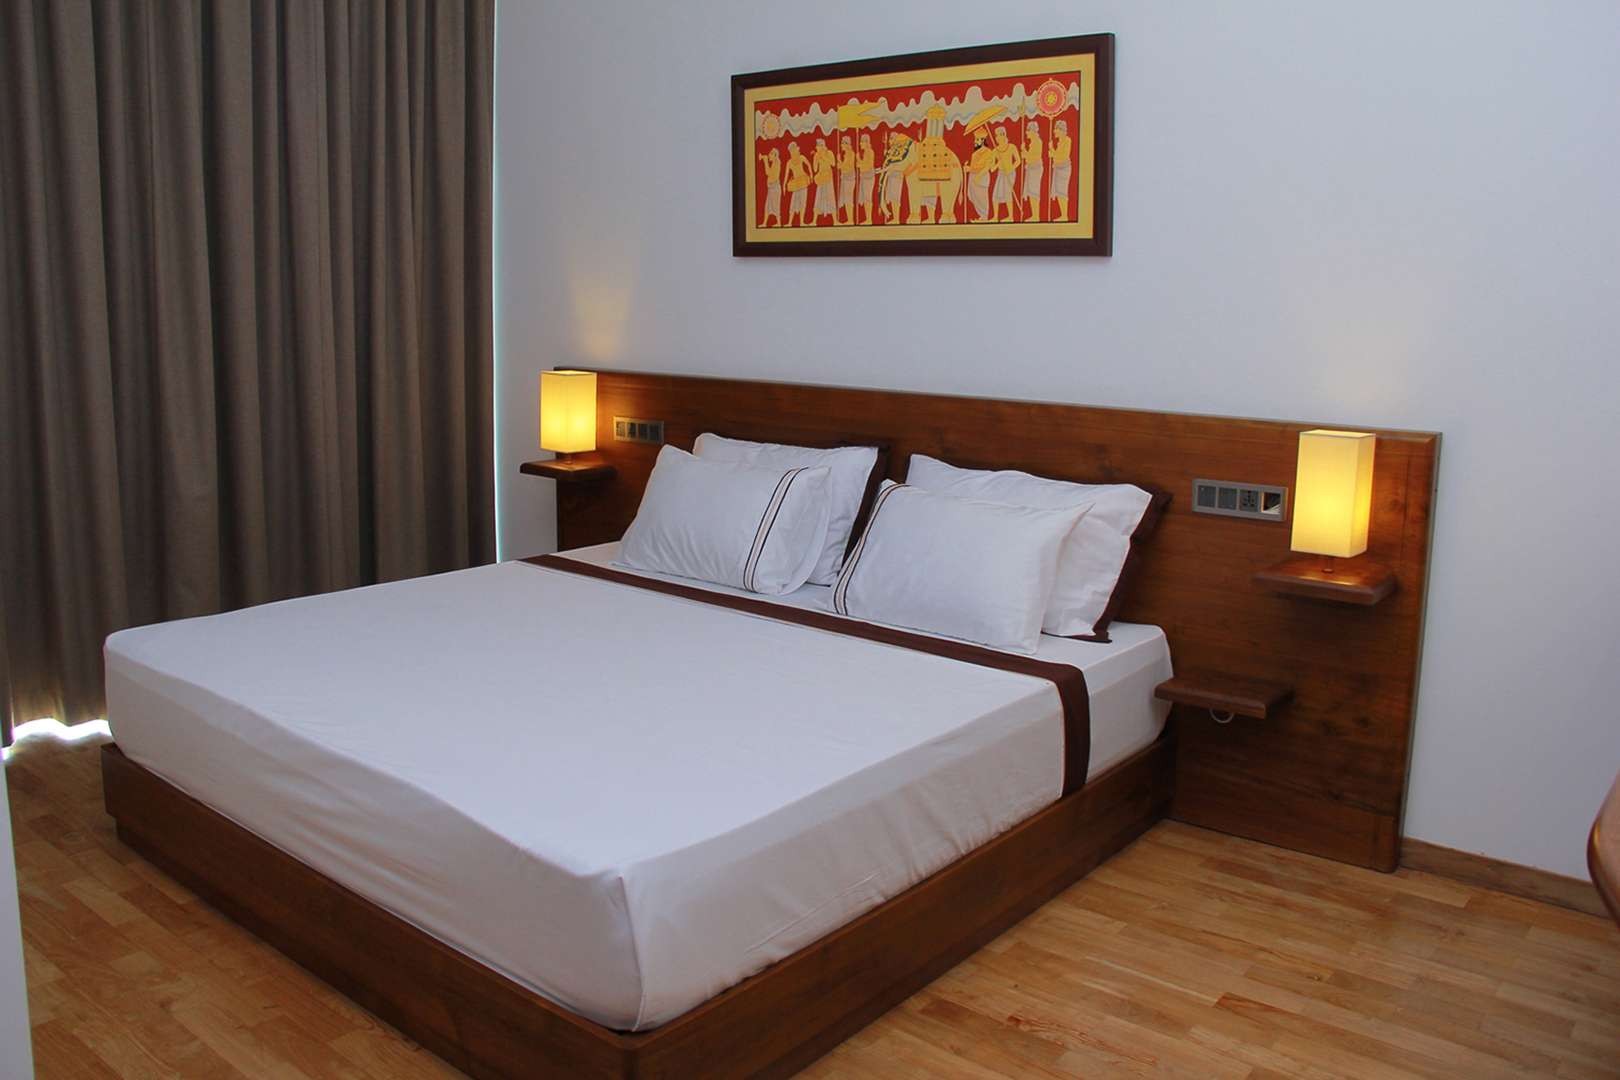 Deluxe Room, Arena Hotel Sri Lanca 4*